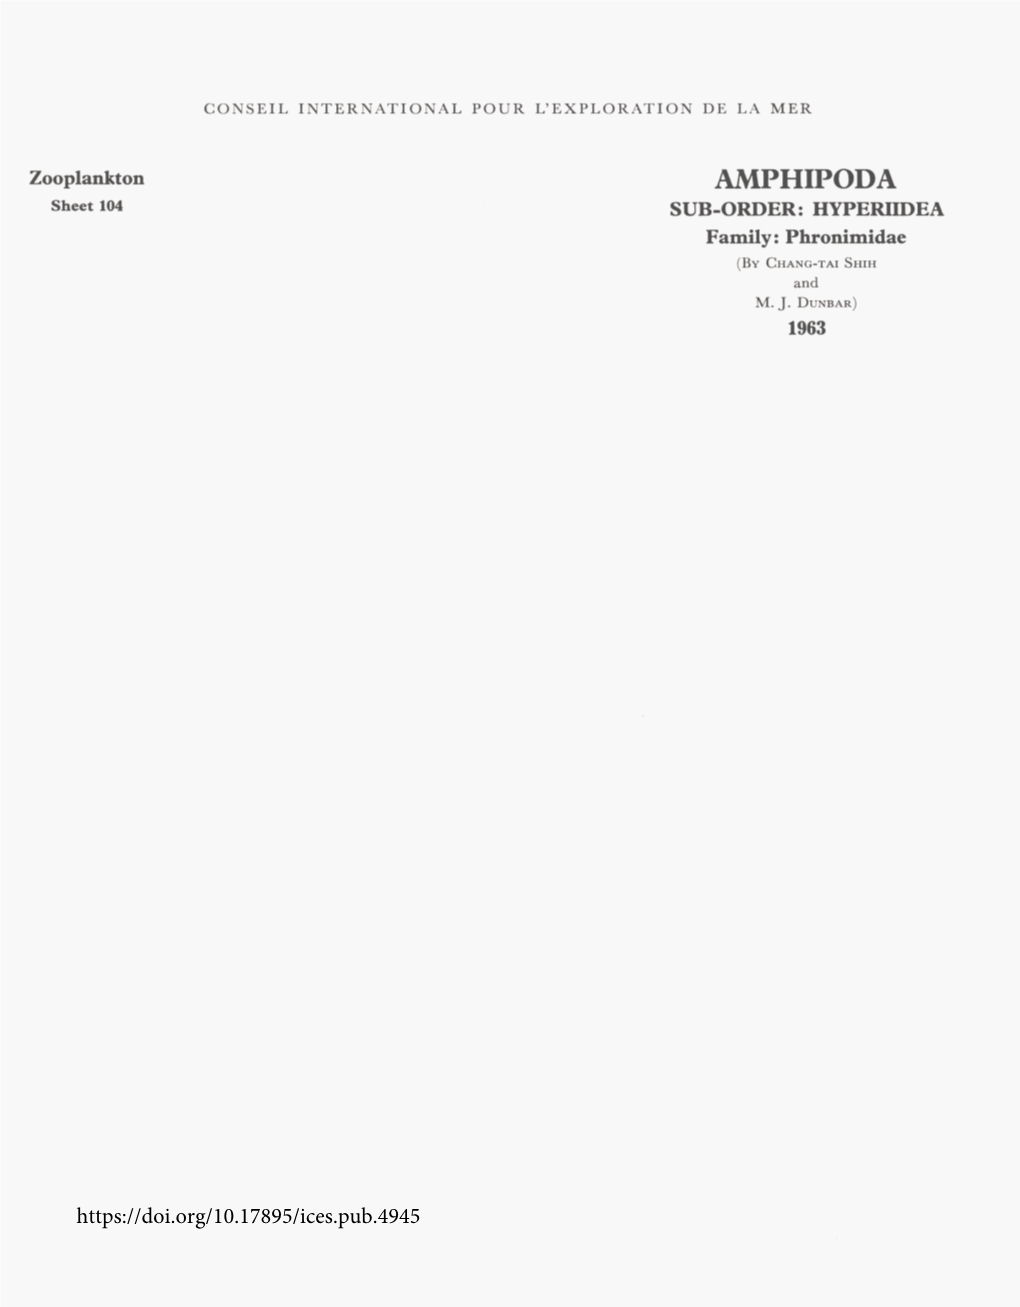 AMPHIPODA Sheet 104 SUB-ORDER: HYPERIIDEA Family: Phronimidae (BY CHANG-TAISHIH and M